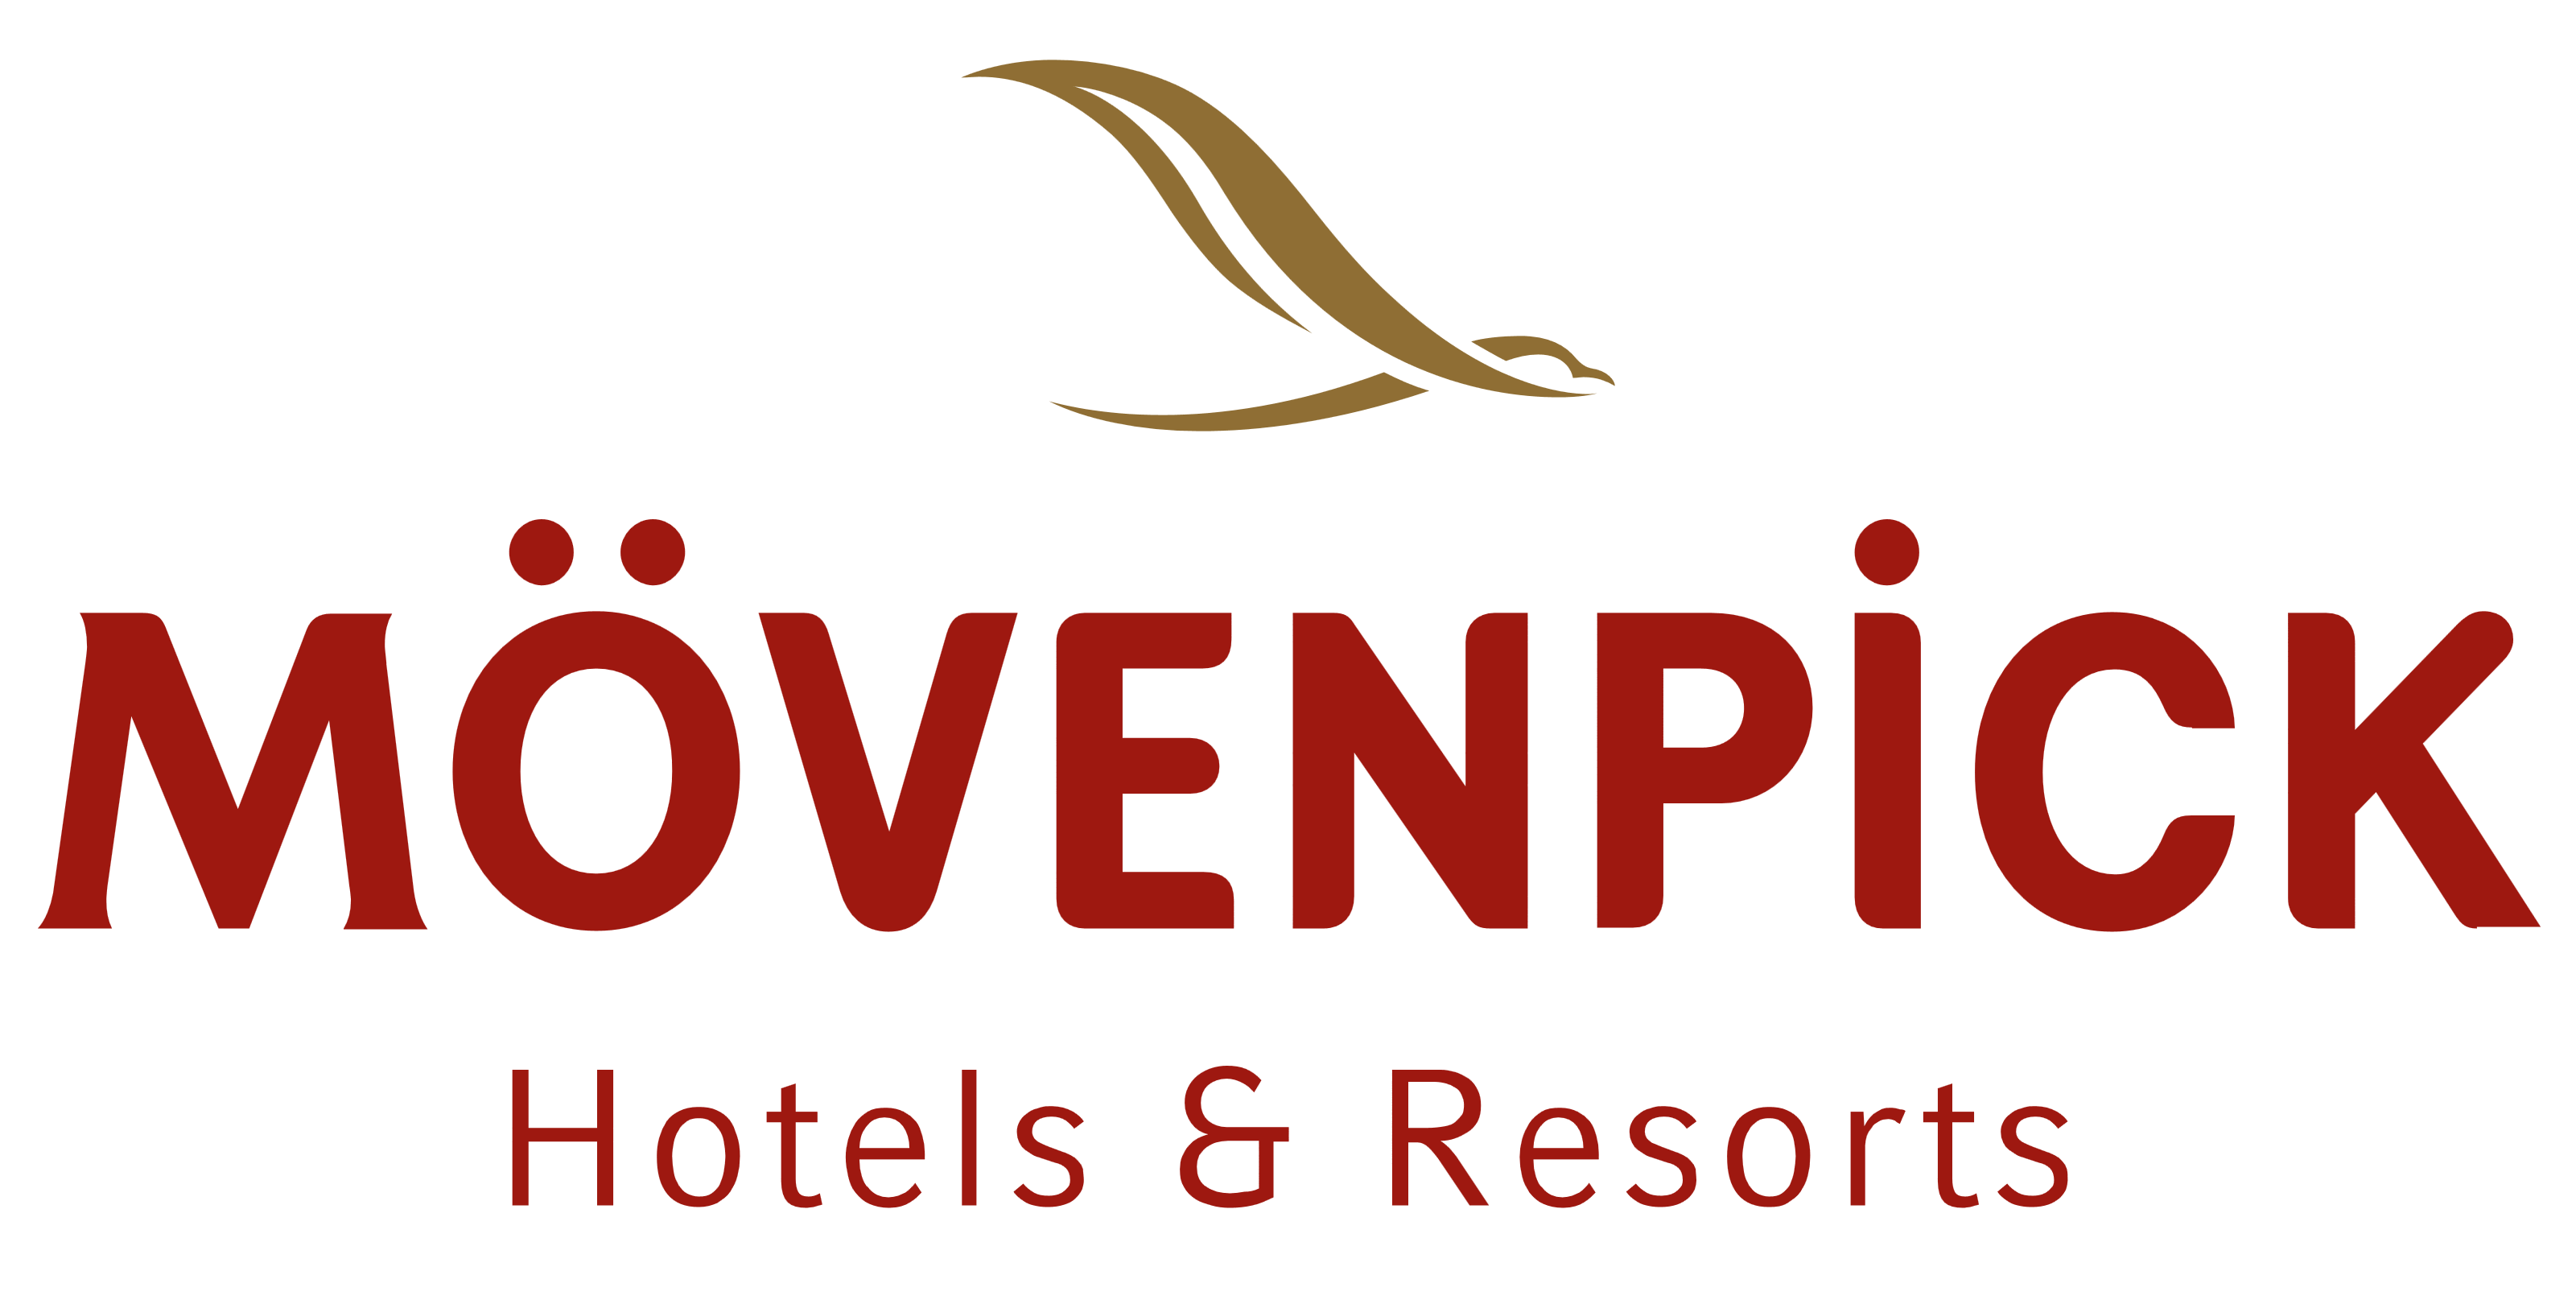 Movenpick Hotels & Resorts logo, logotype